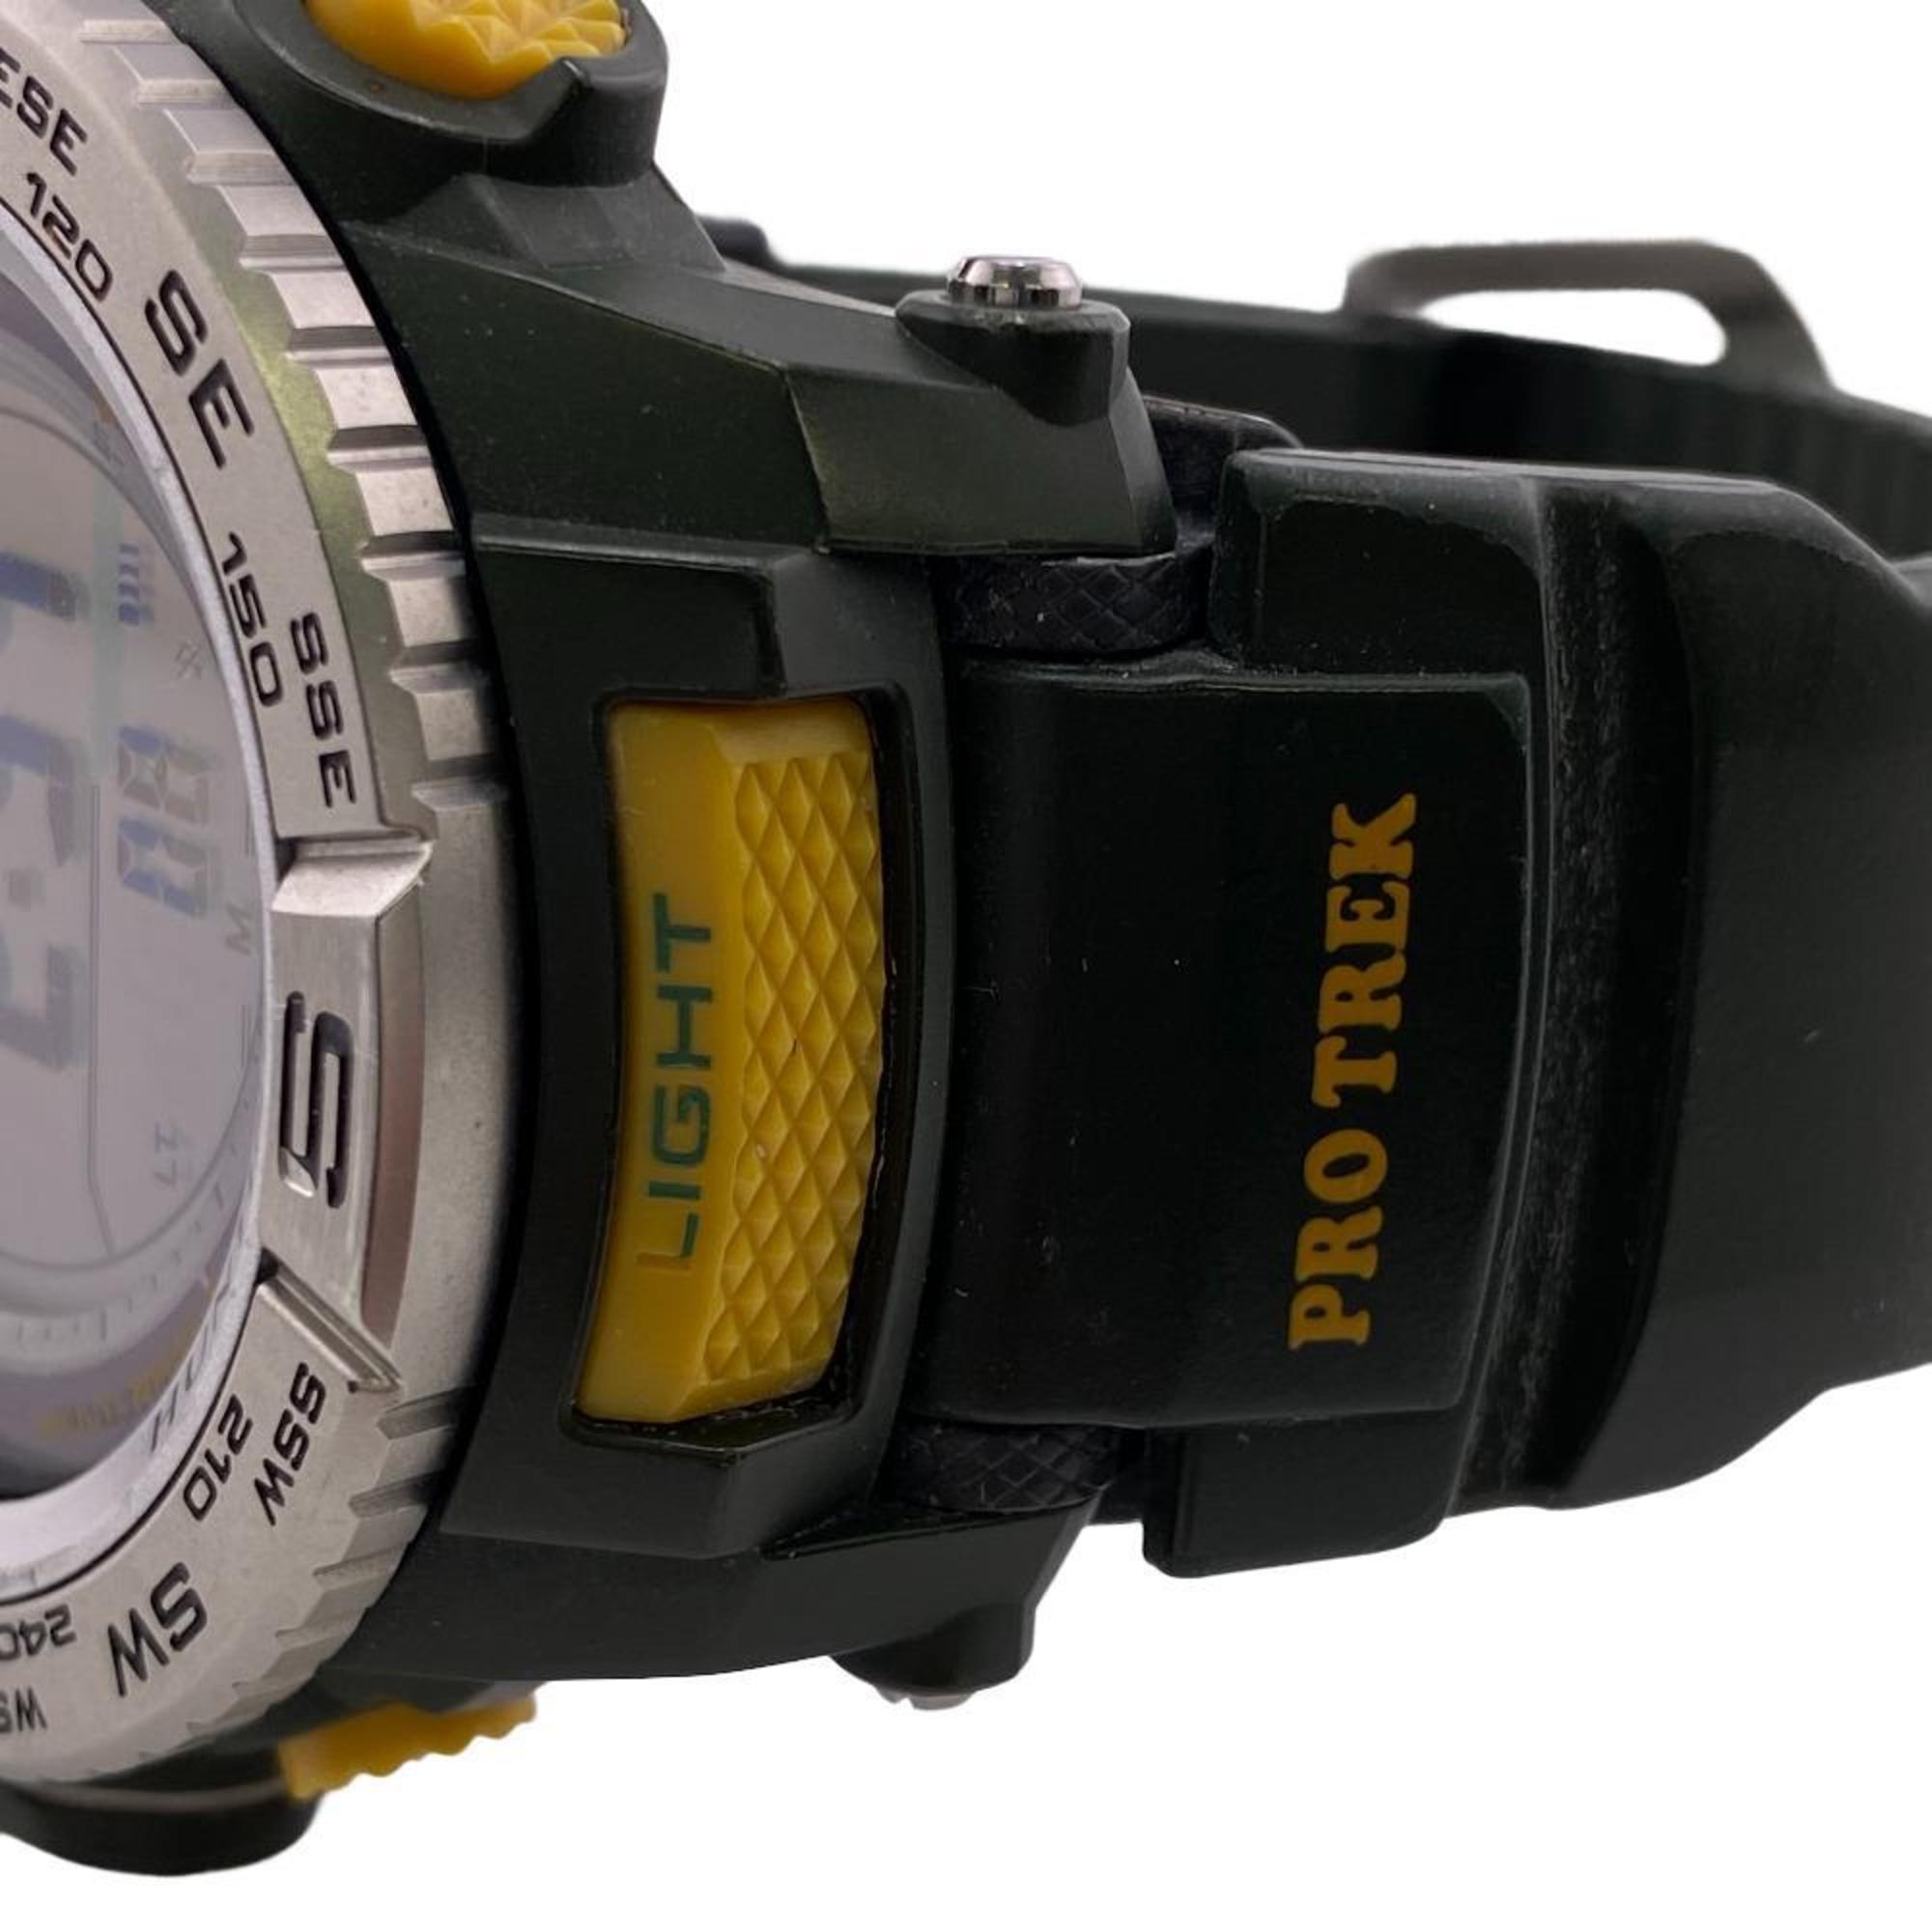 Casio Pro Trek Radio Wave Control Solar Men's Watch prw-3510hw